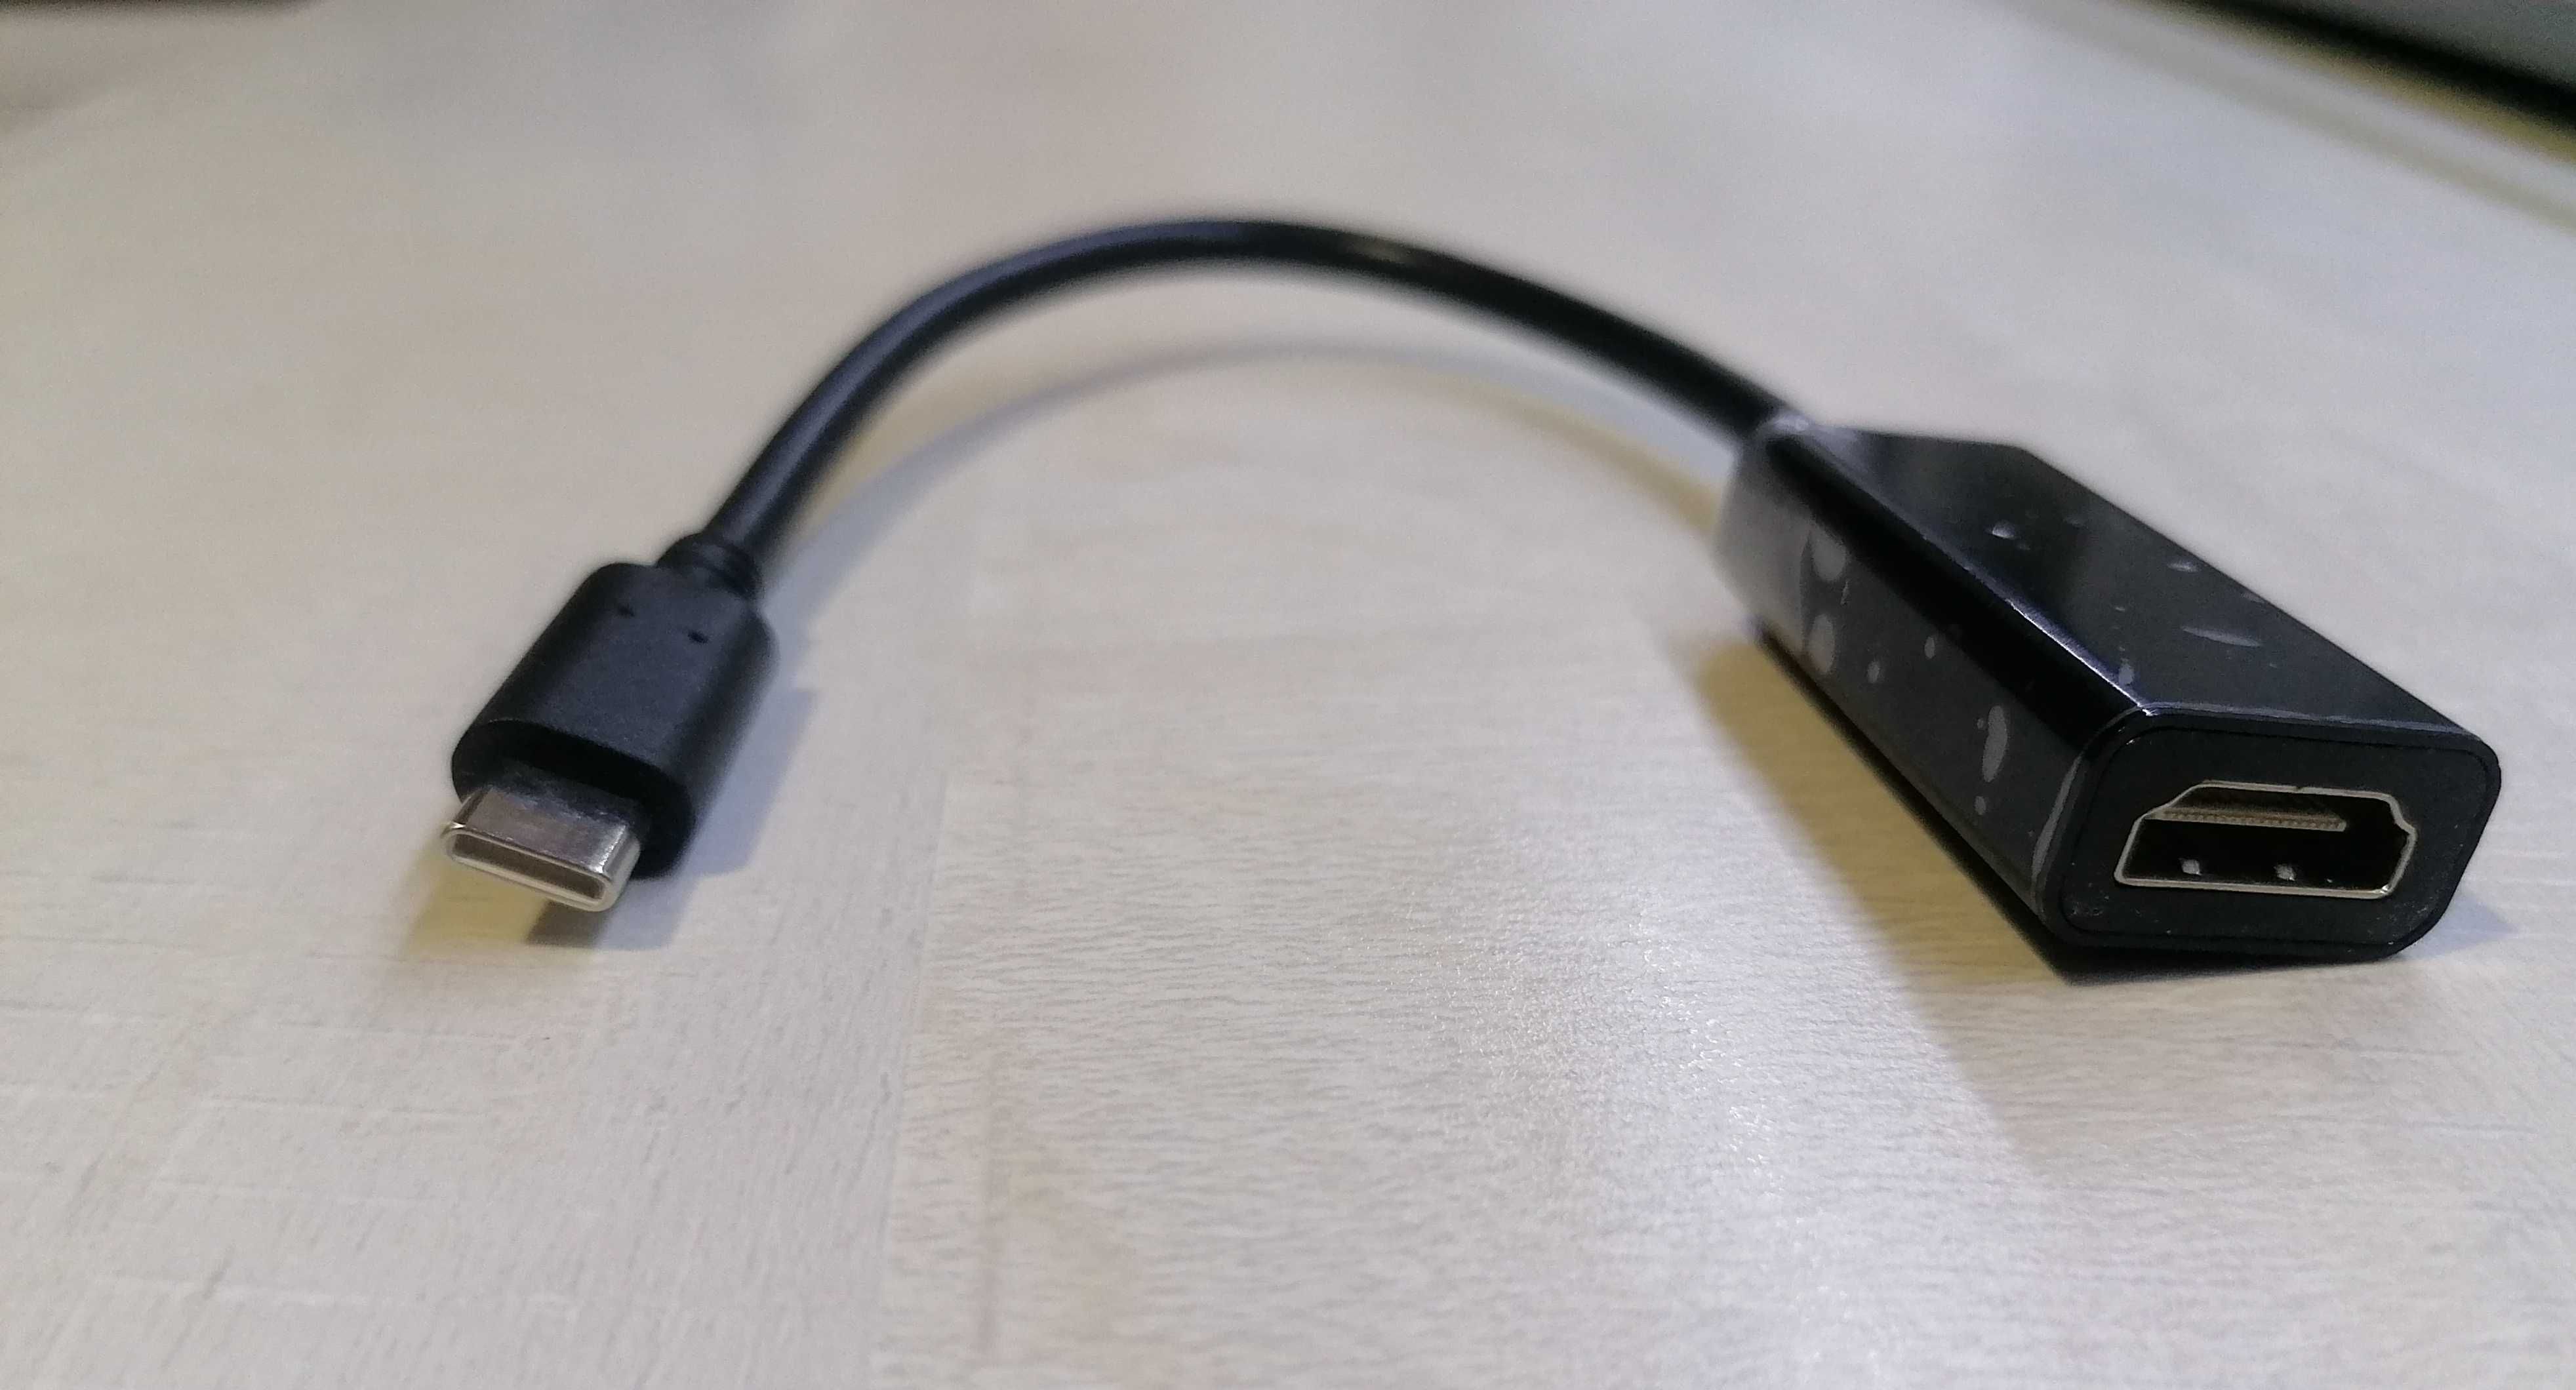 USB-C към HDMI кабел / преходник/адаптер - MacBook, iMac, Apple - НОВ